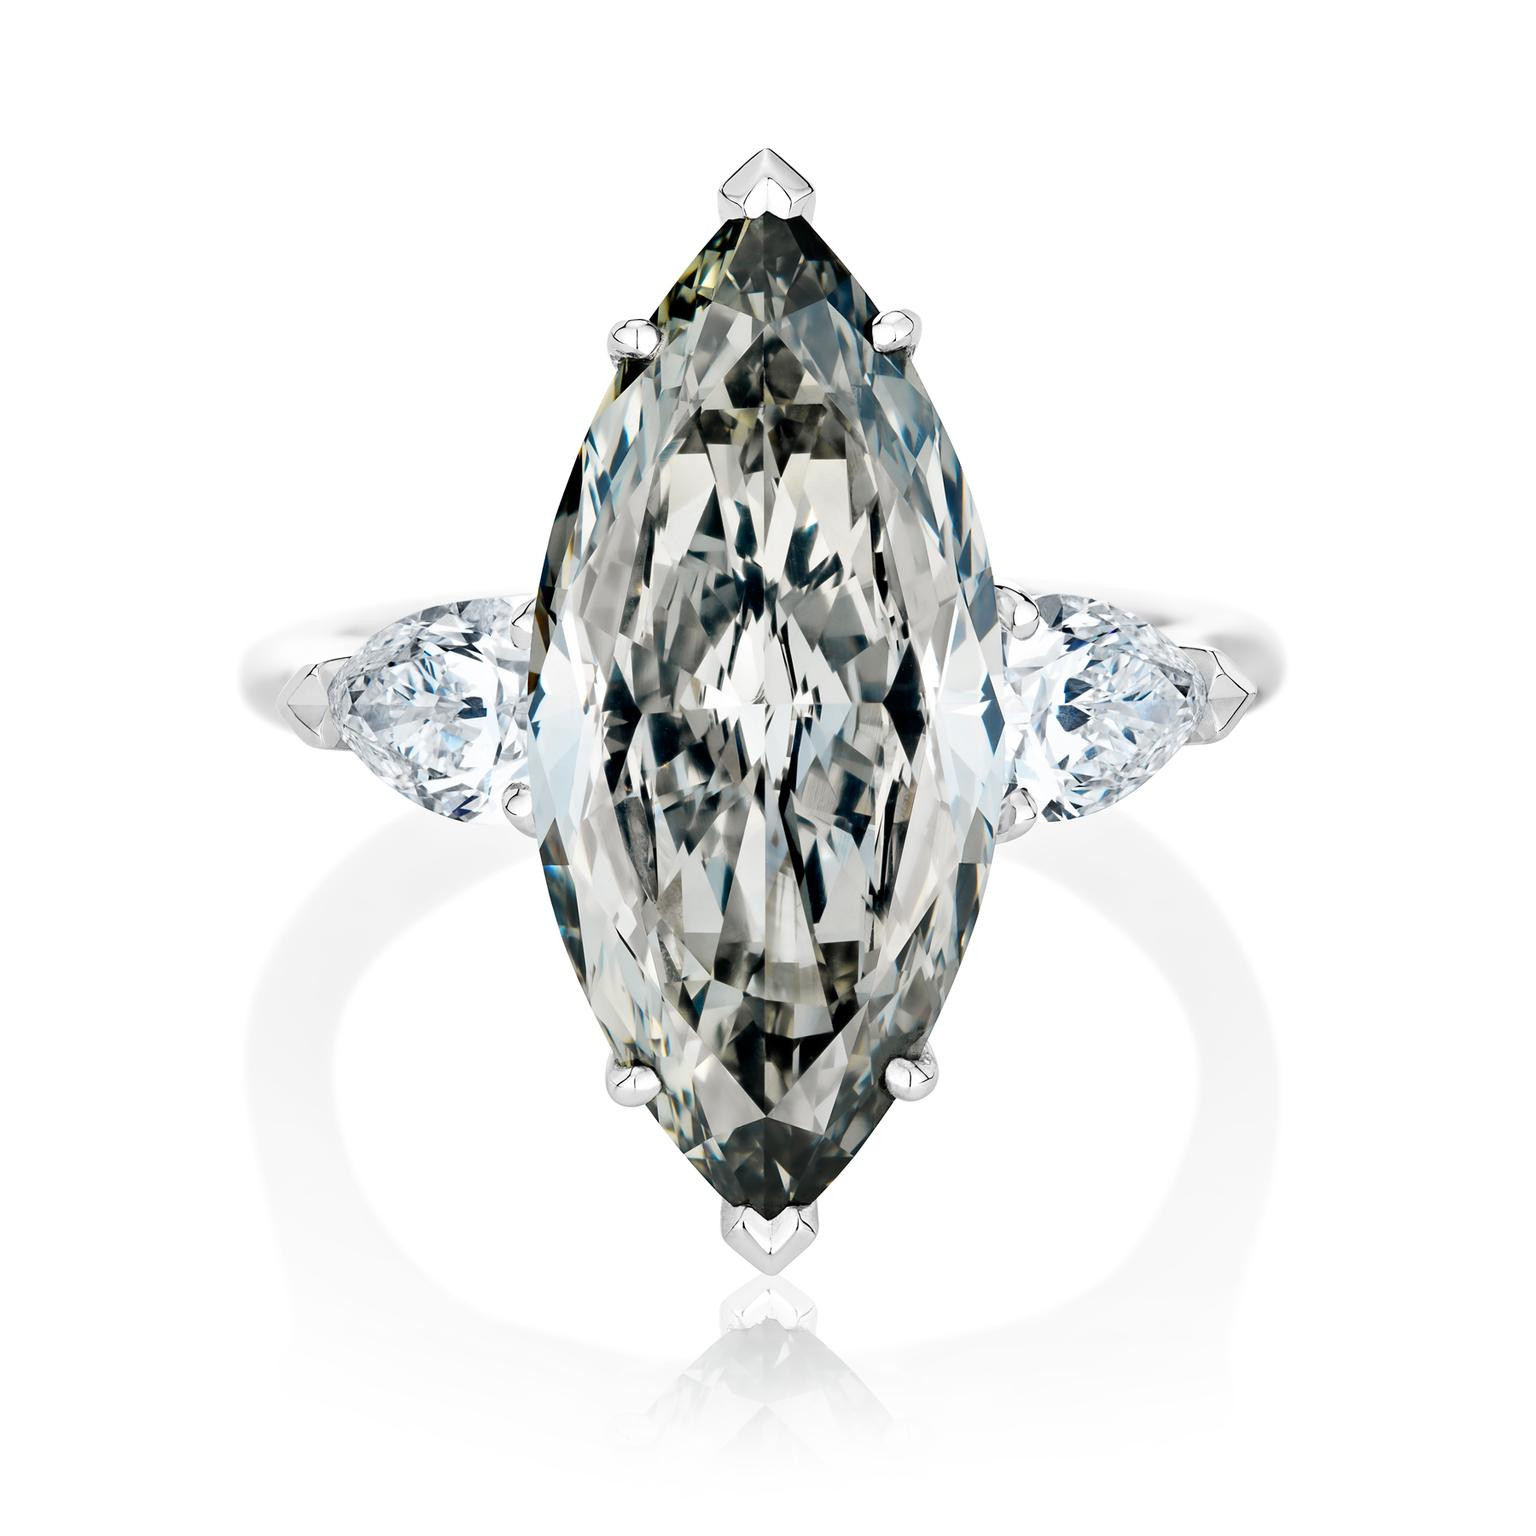 Grey Diamond Engagement Rings
 4 27 carat marquise cut Fancy grey diamond engagement ring